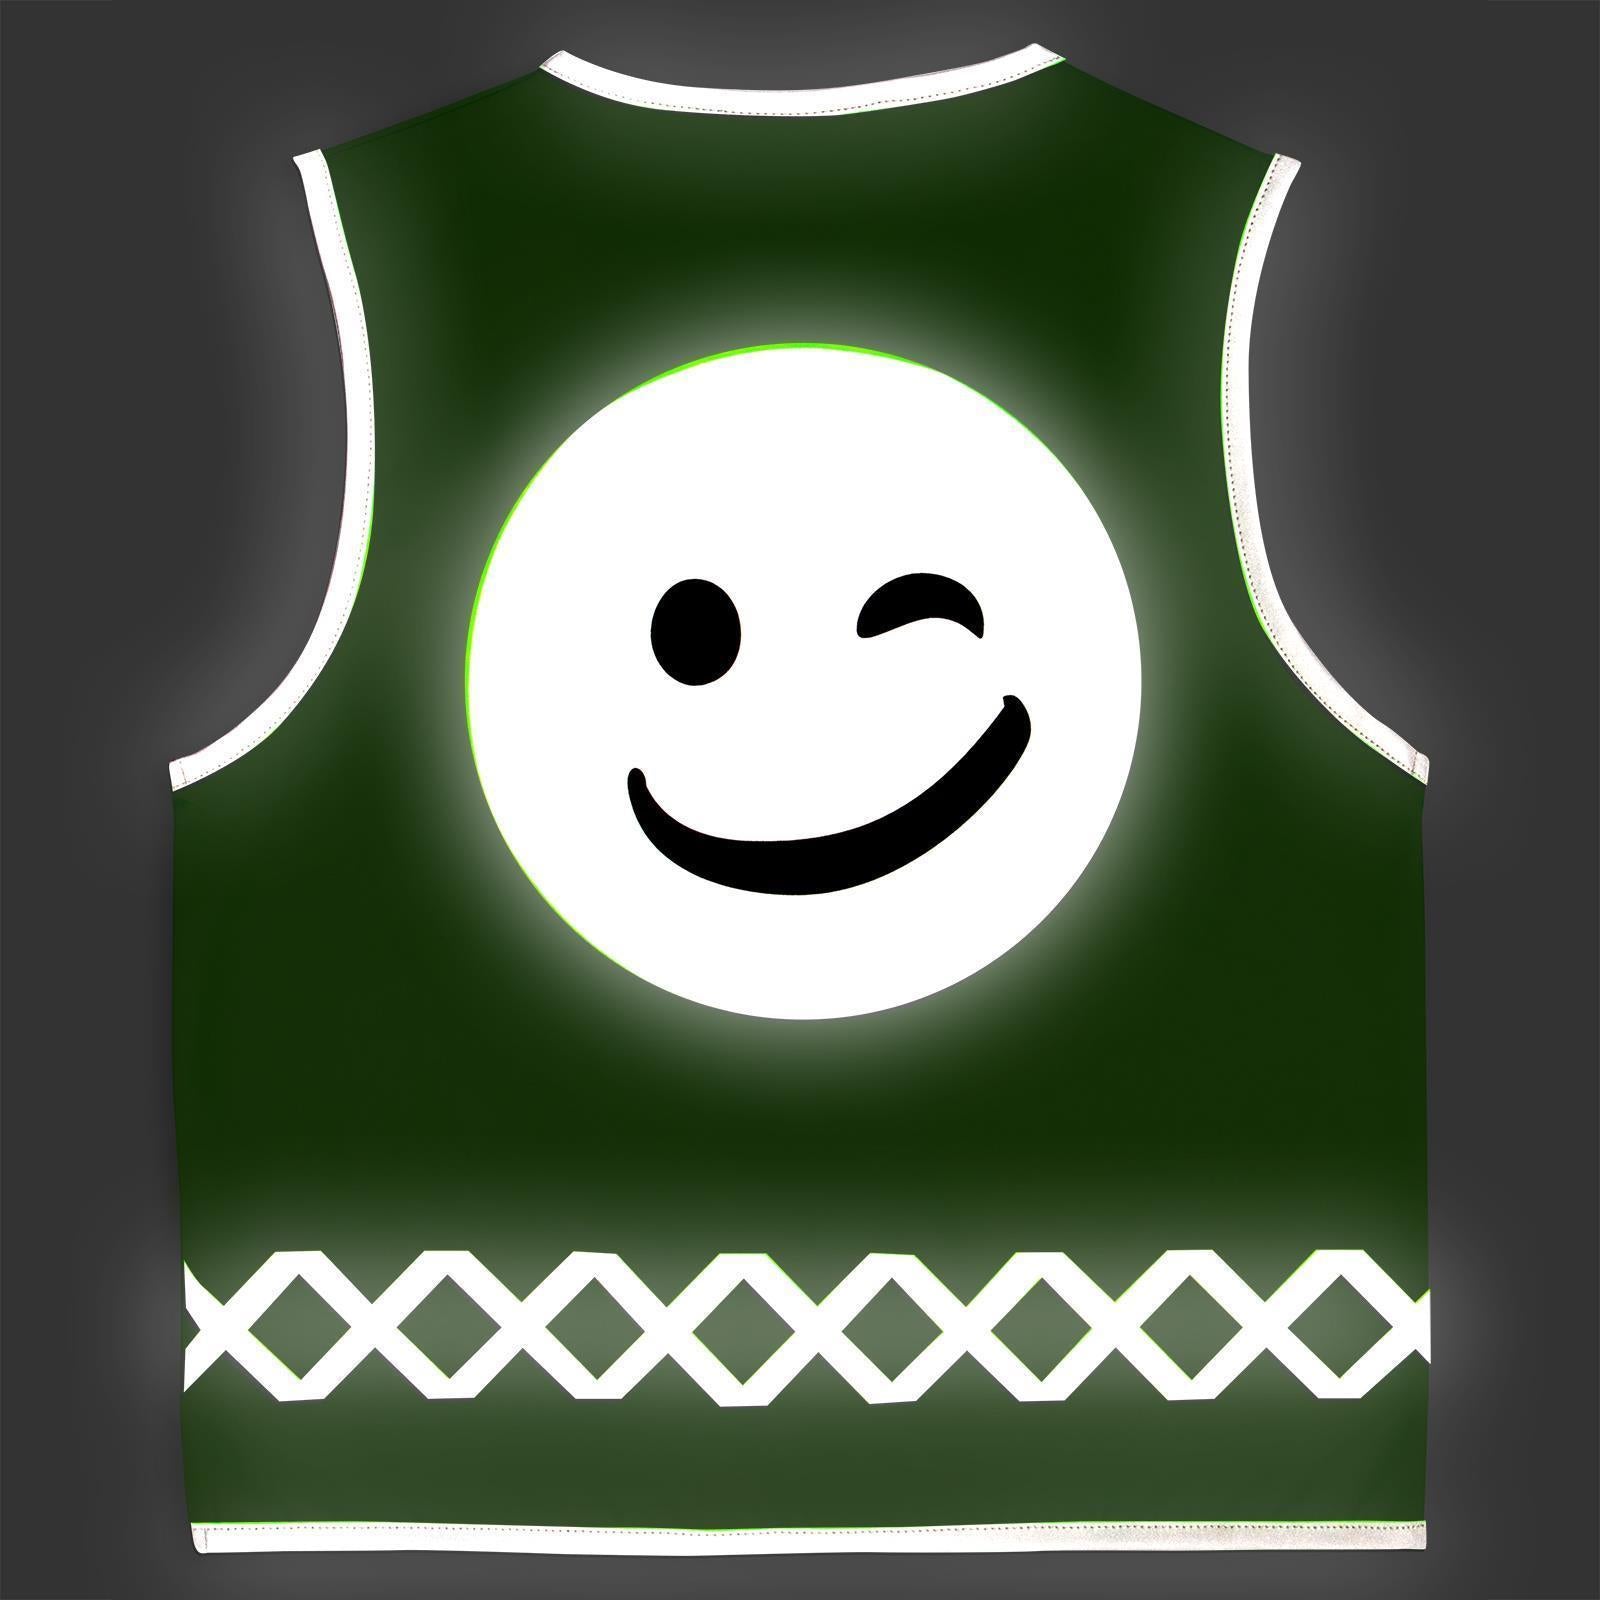 Solid Green Smiley - Kinderwarnweste